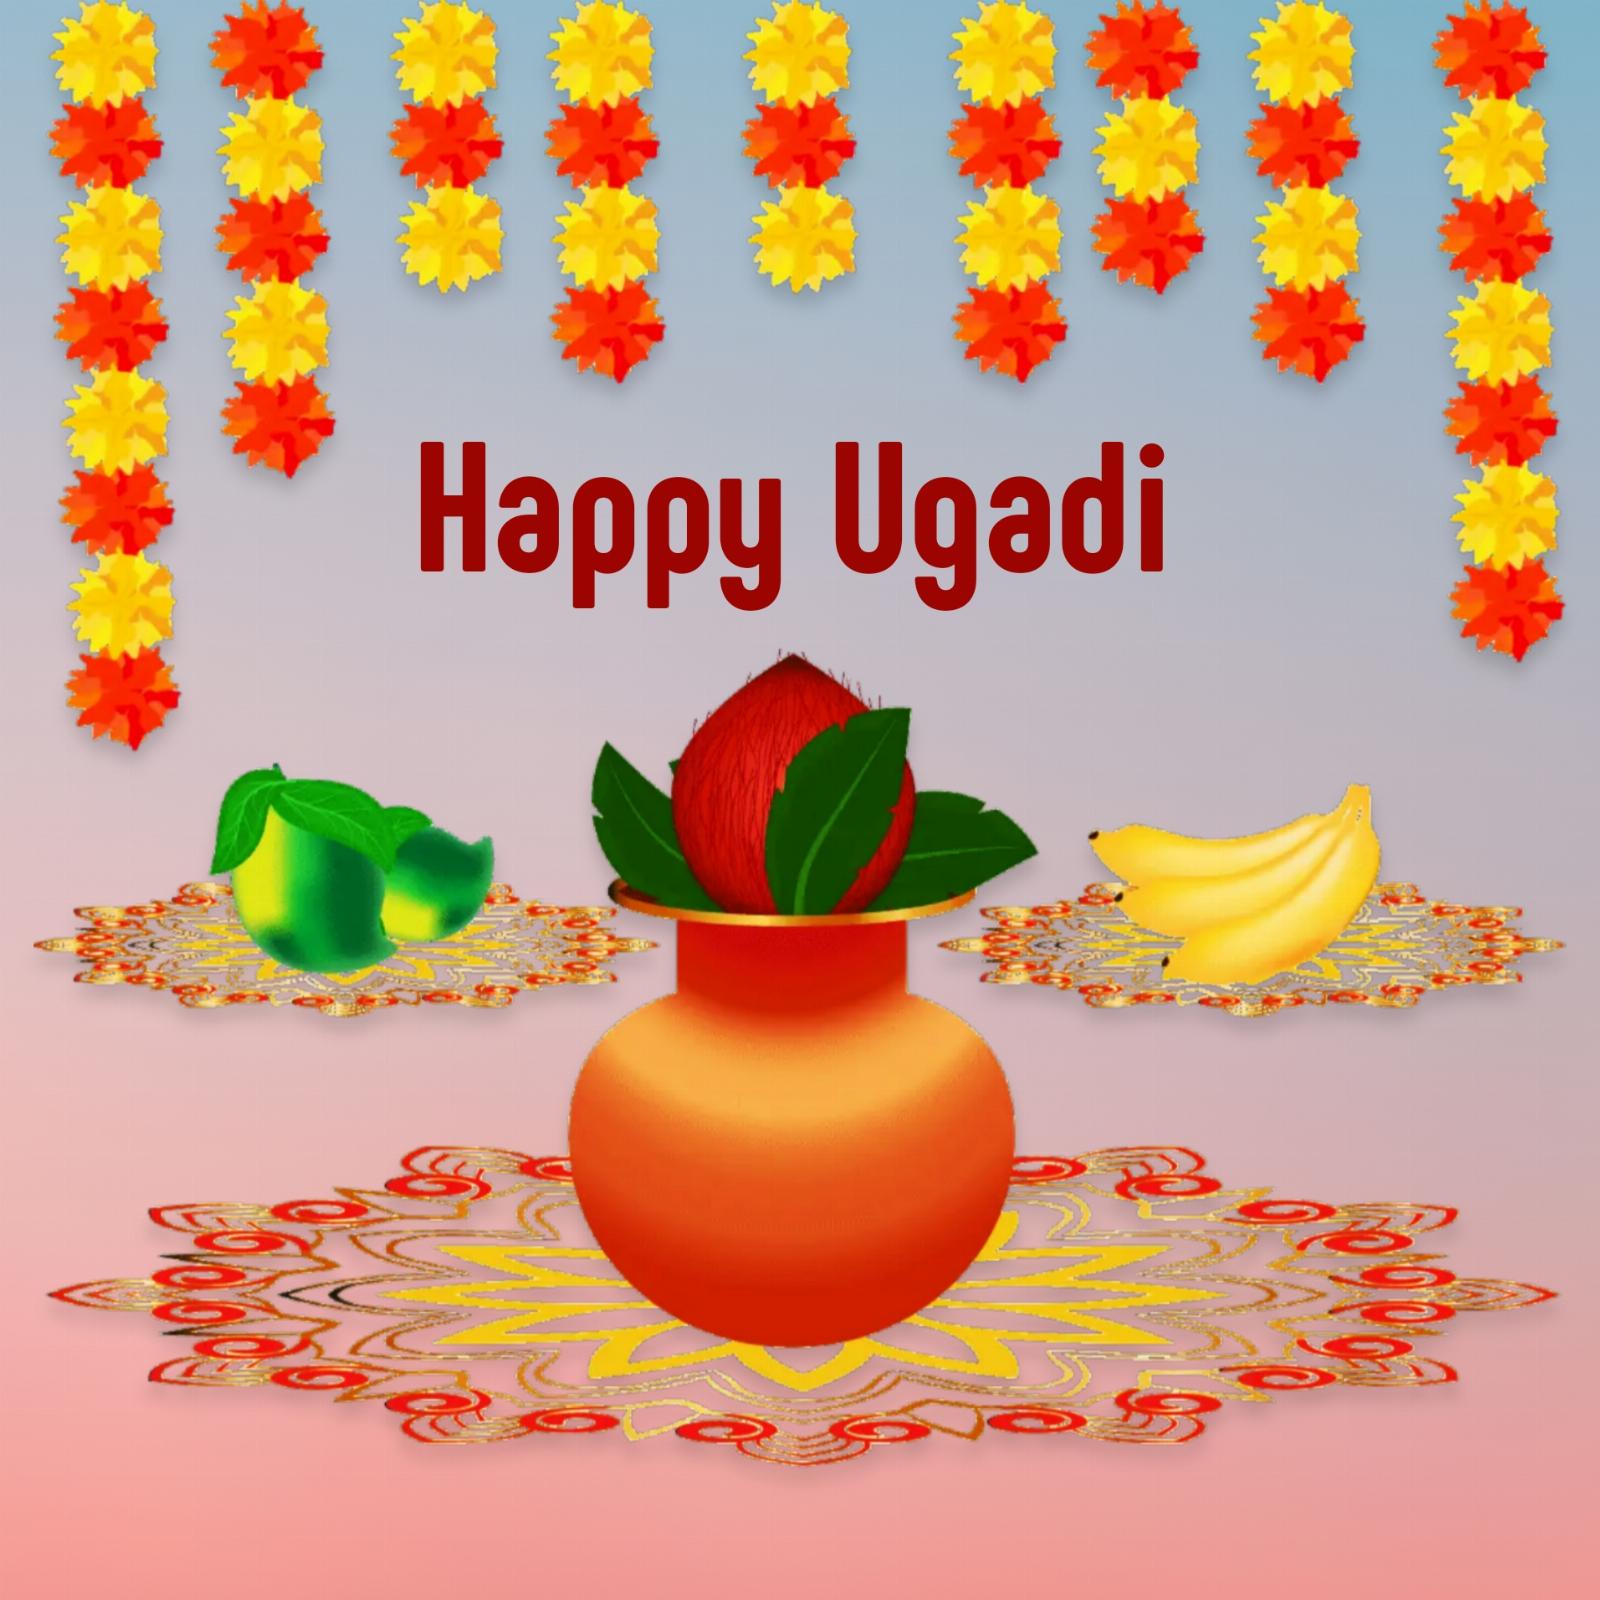 Happy Ugadi Festival Images